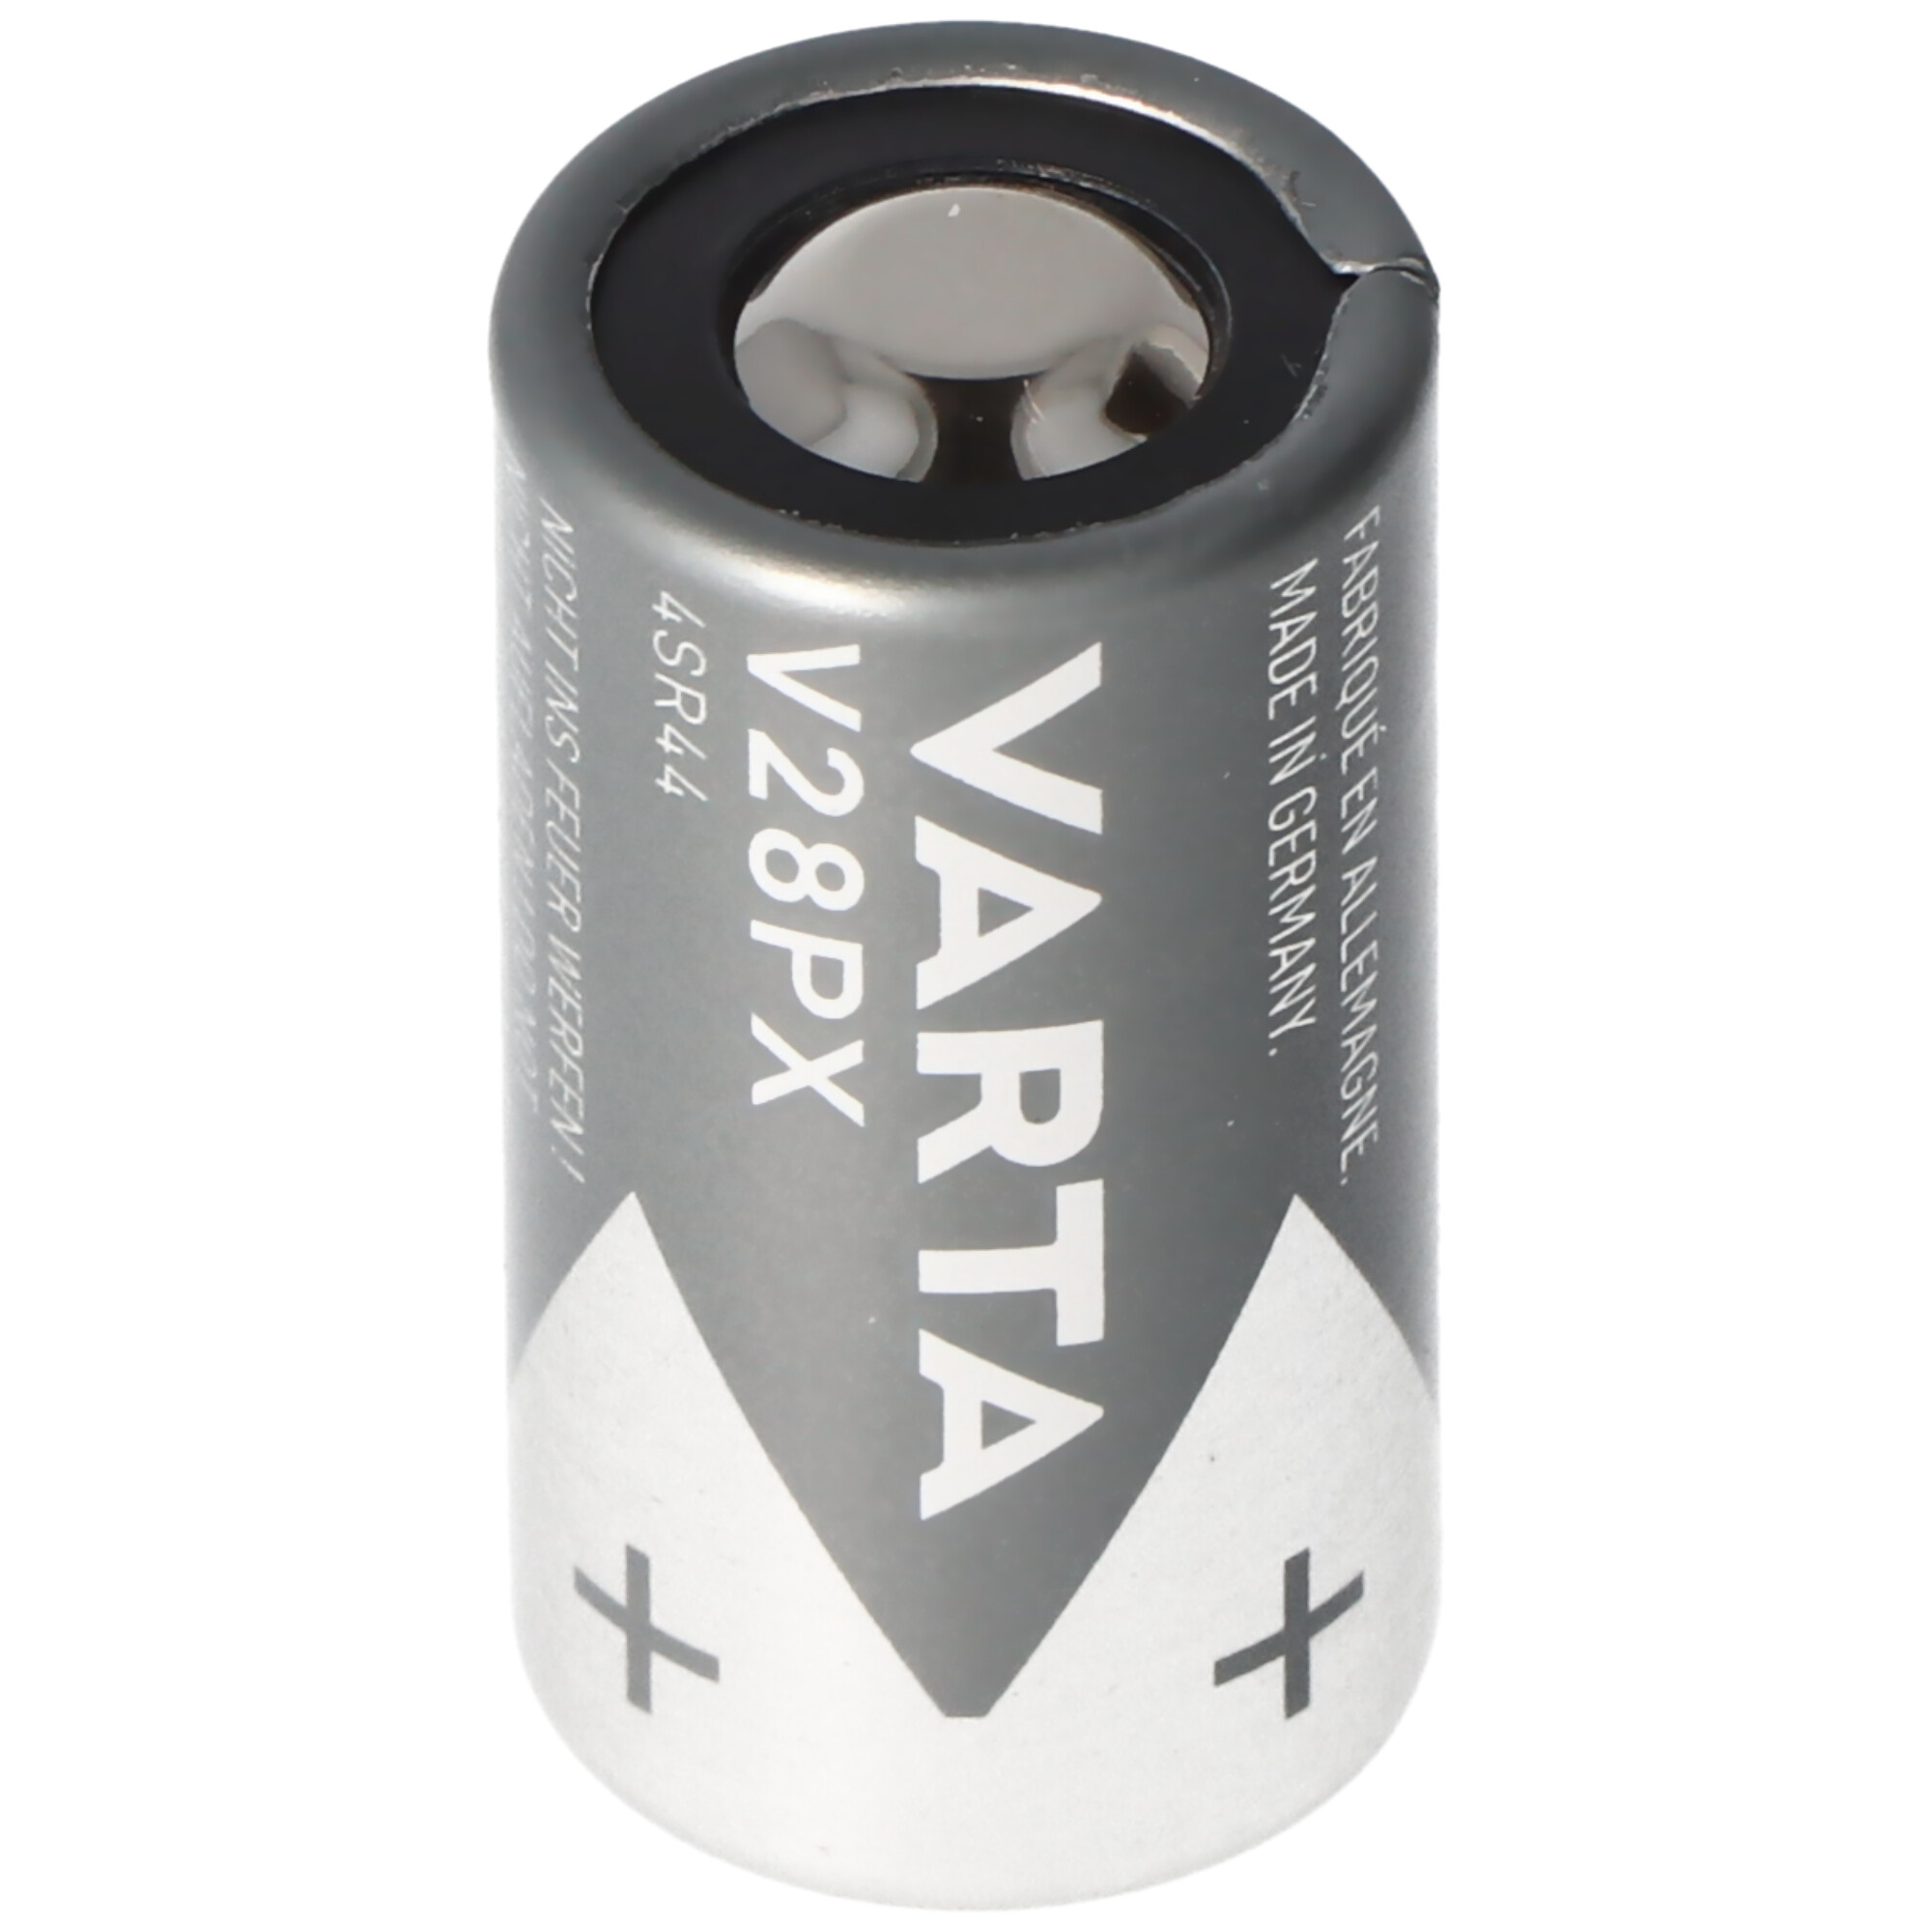 Varta V28PX, 4SR44 Photo-Batterie, Duracell PX28, GP476